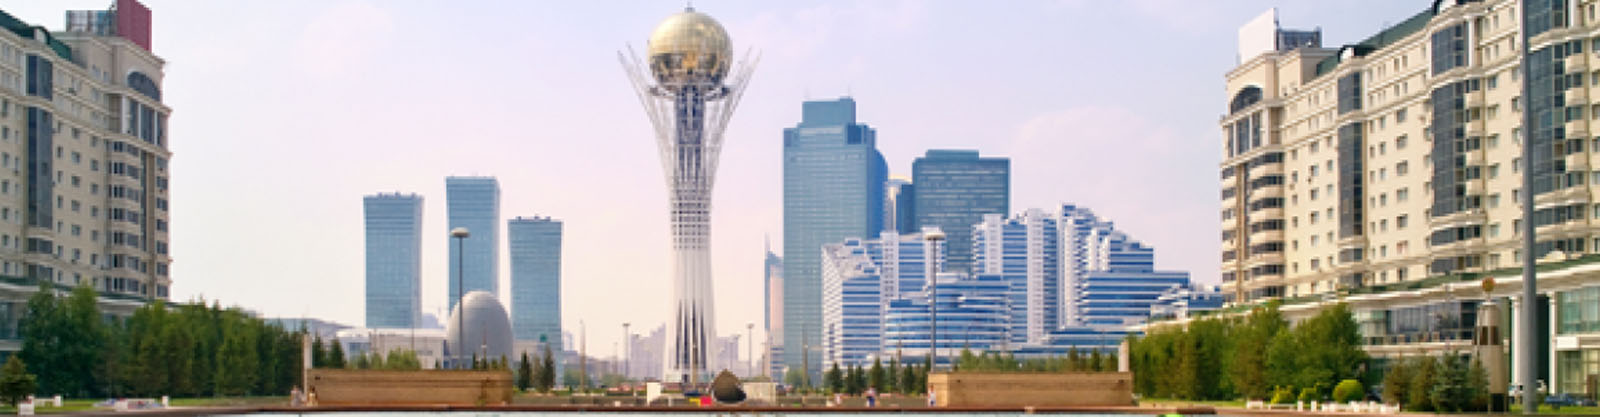 kazakhstan-extension-tour-banner